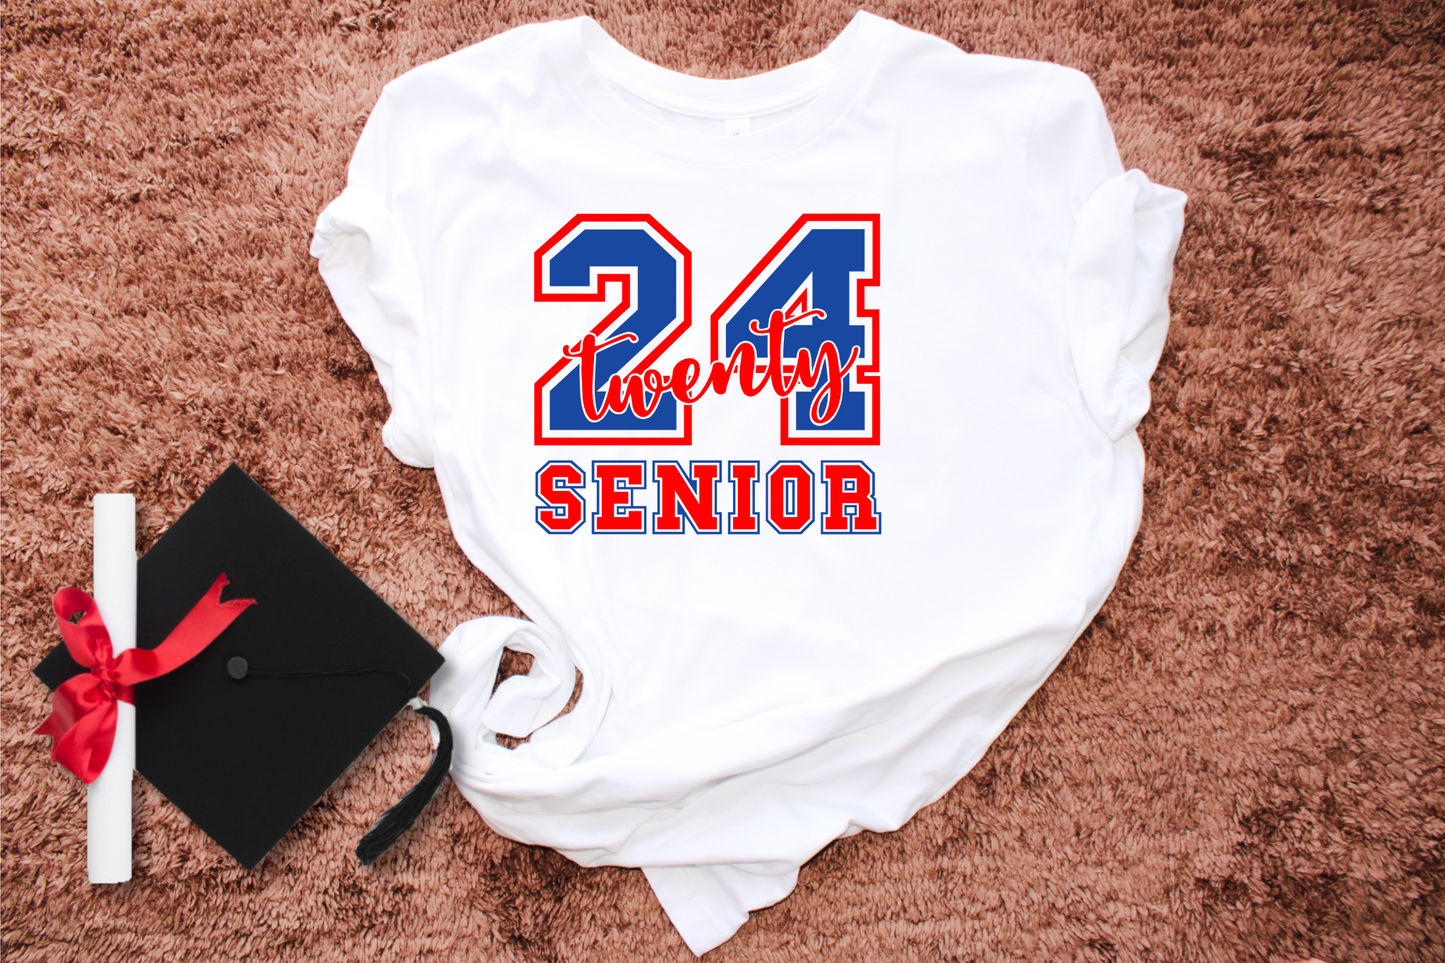 Senior Twenty 24 Collection